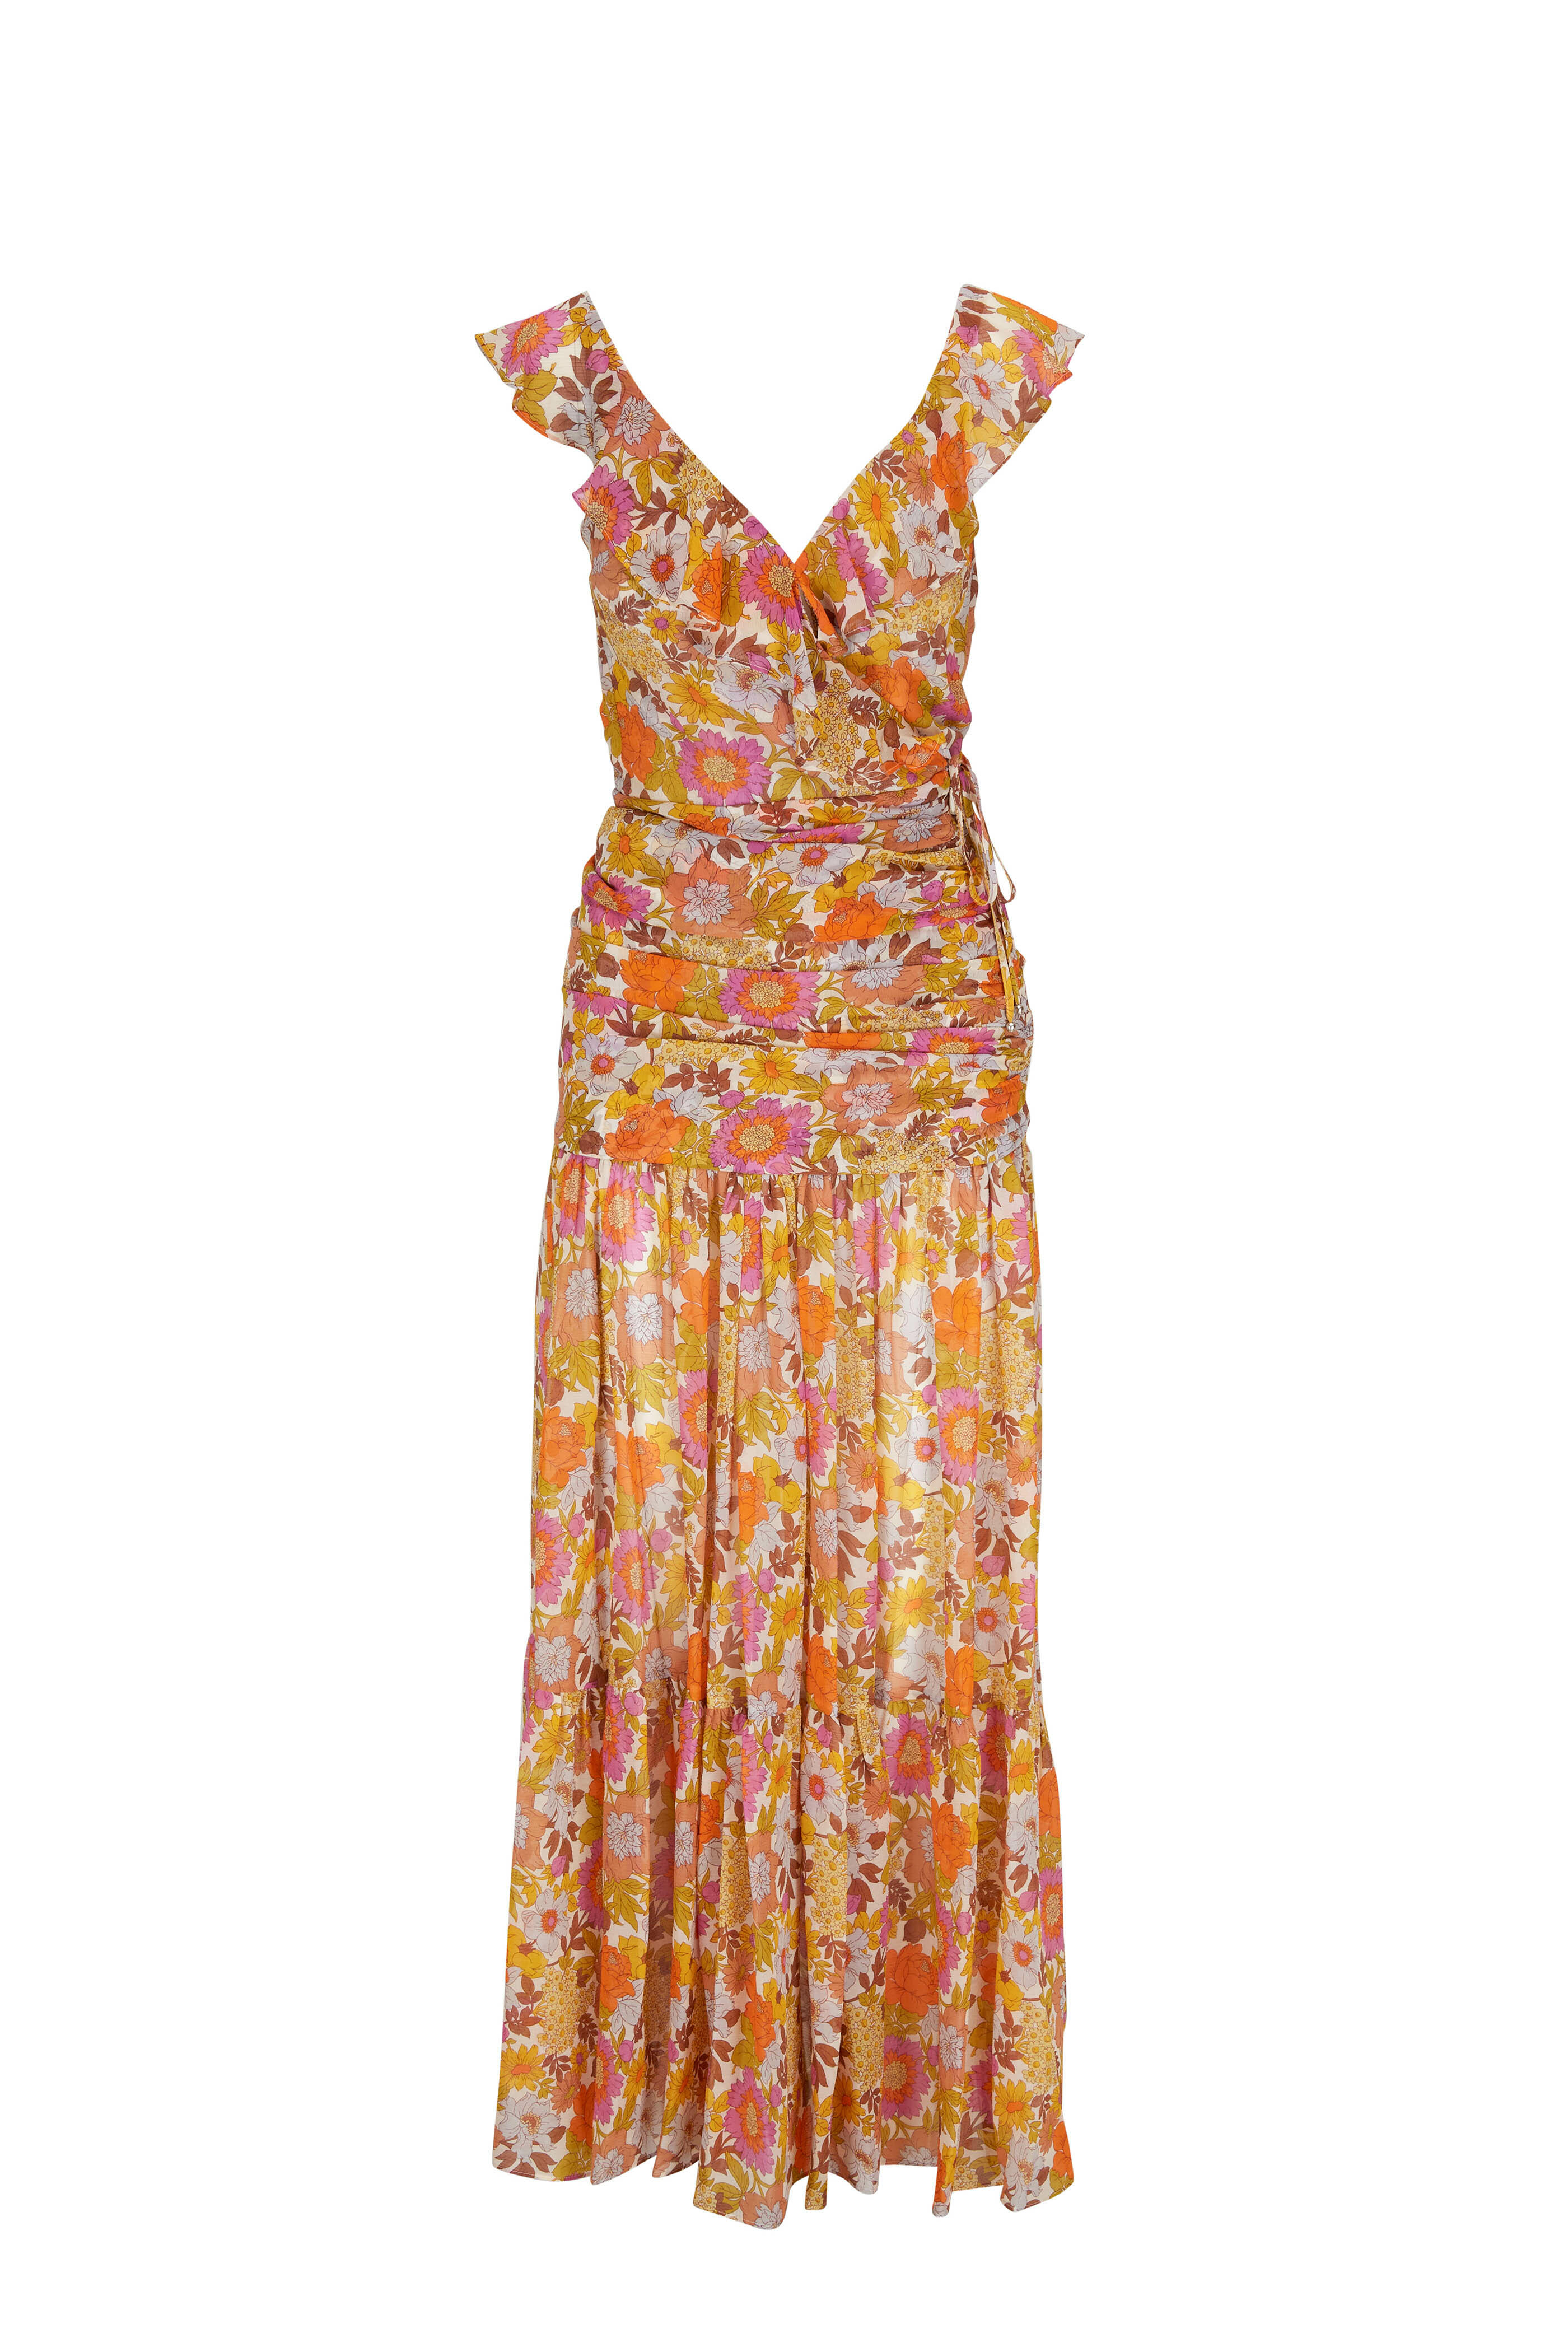 Veronica Beard - Alannah Stone Multicolor Floral Print Dress